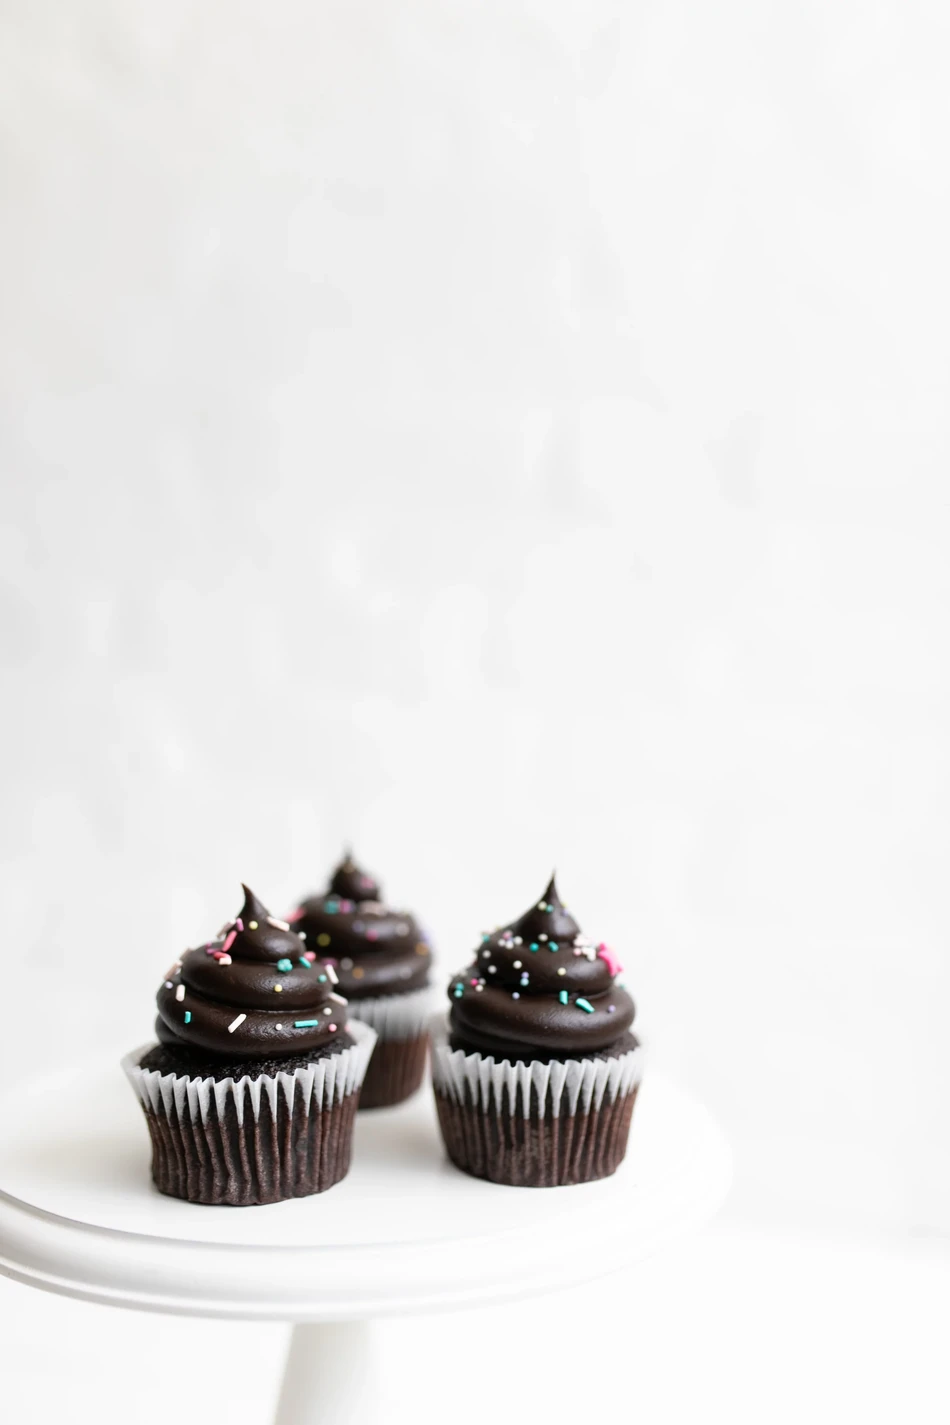 cupcakes de brigadeiro (sprinkles)